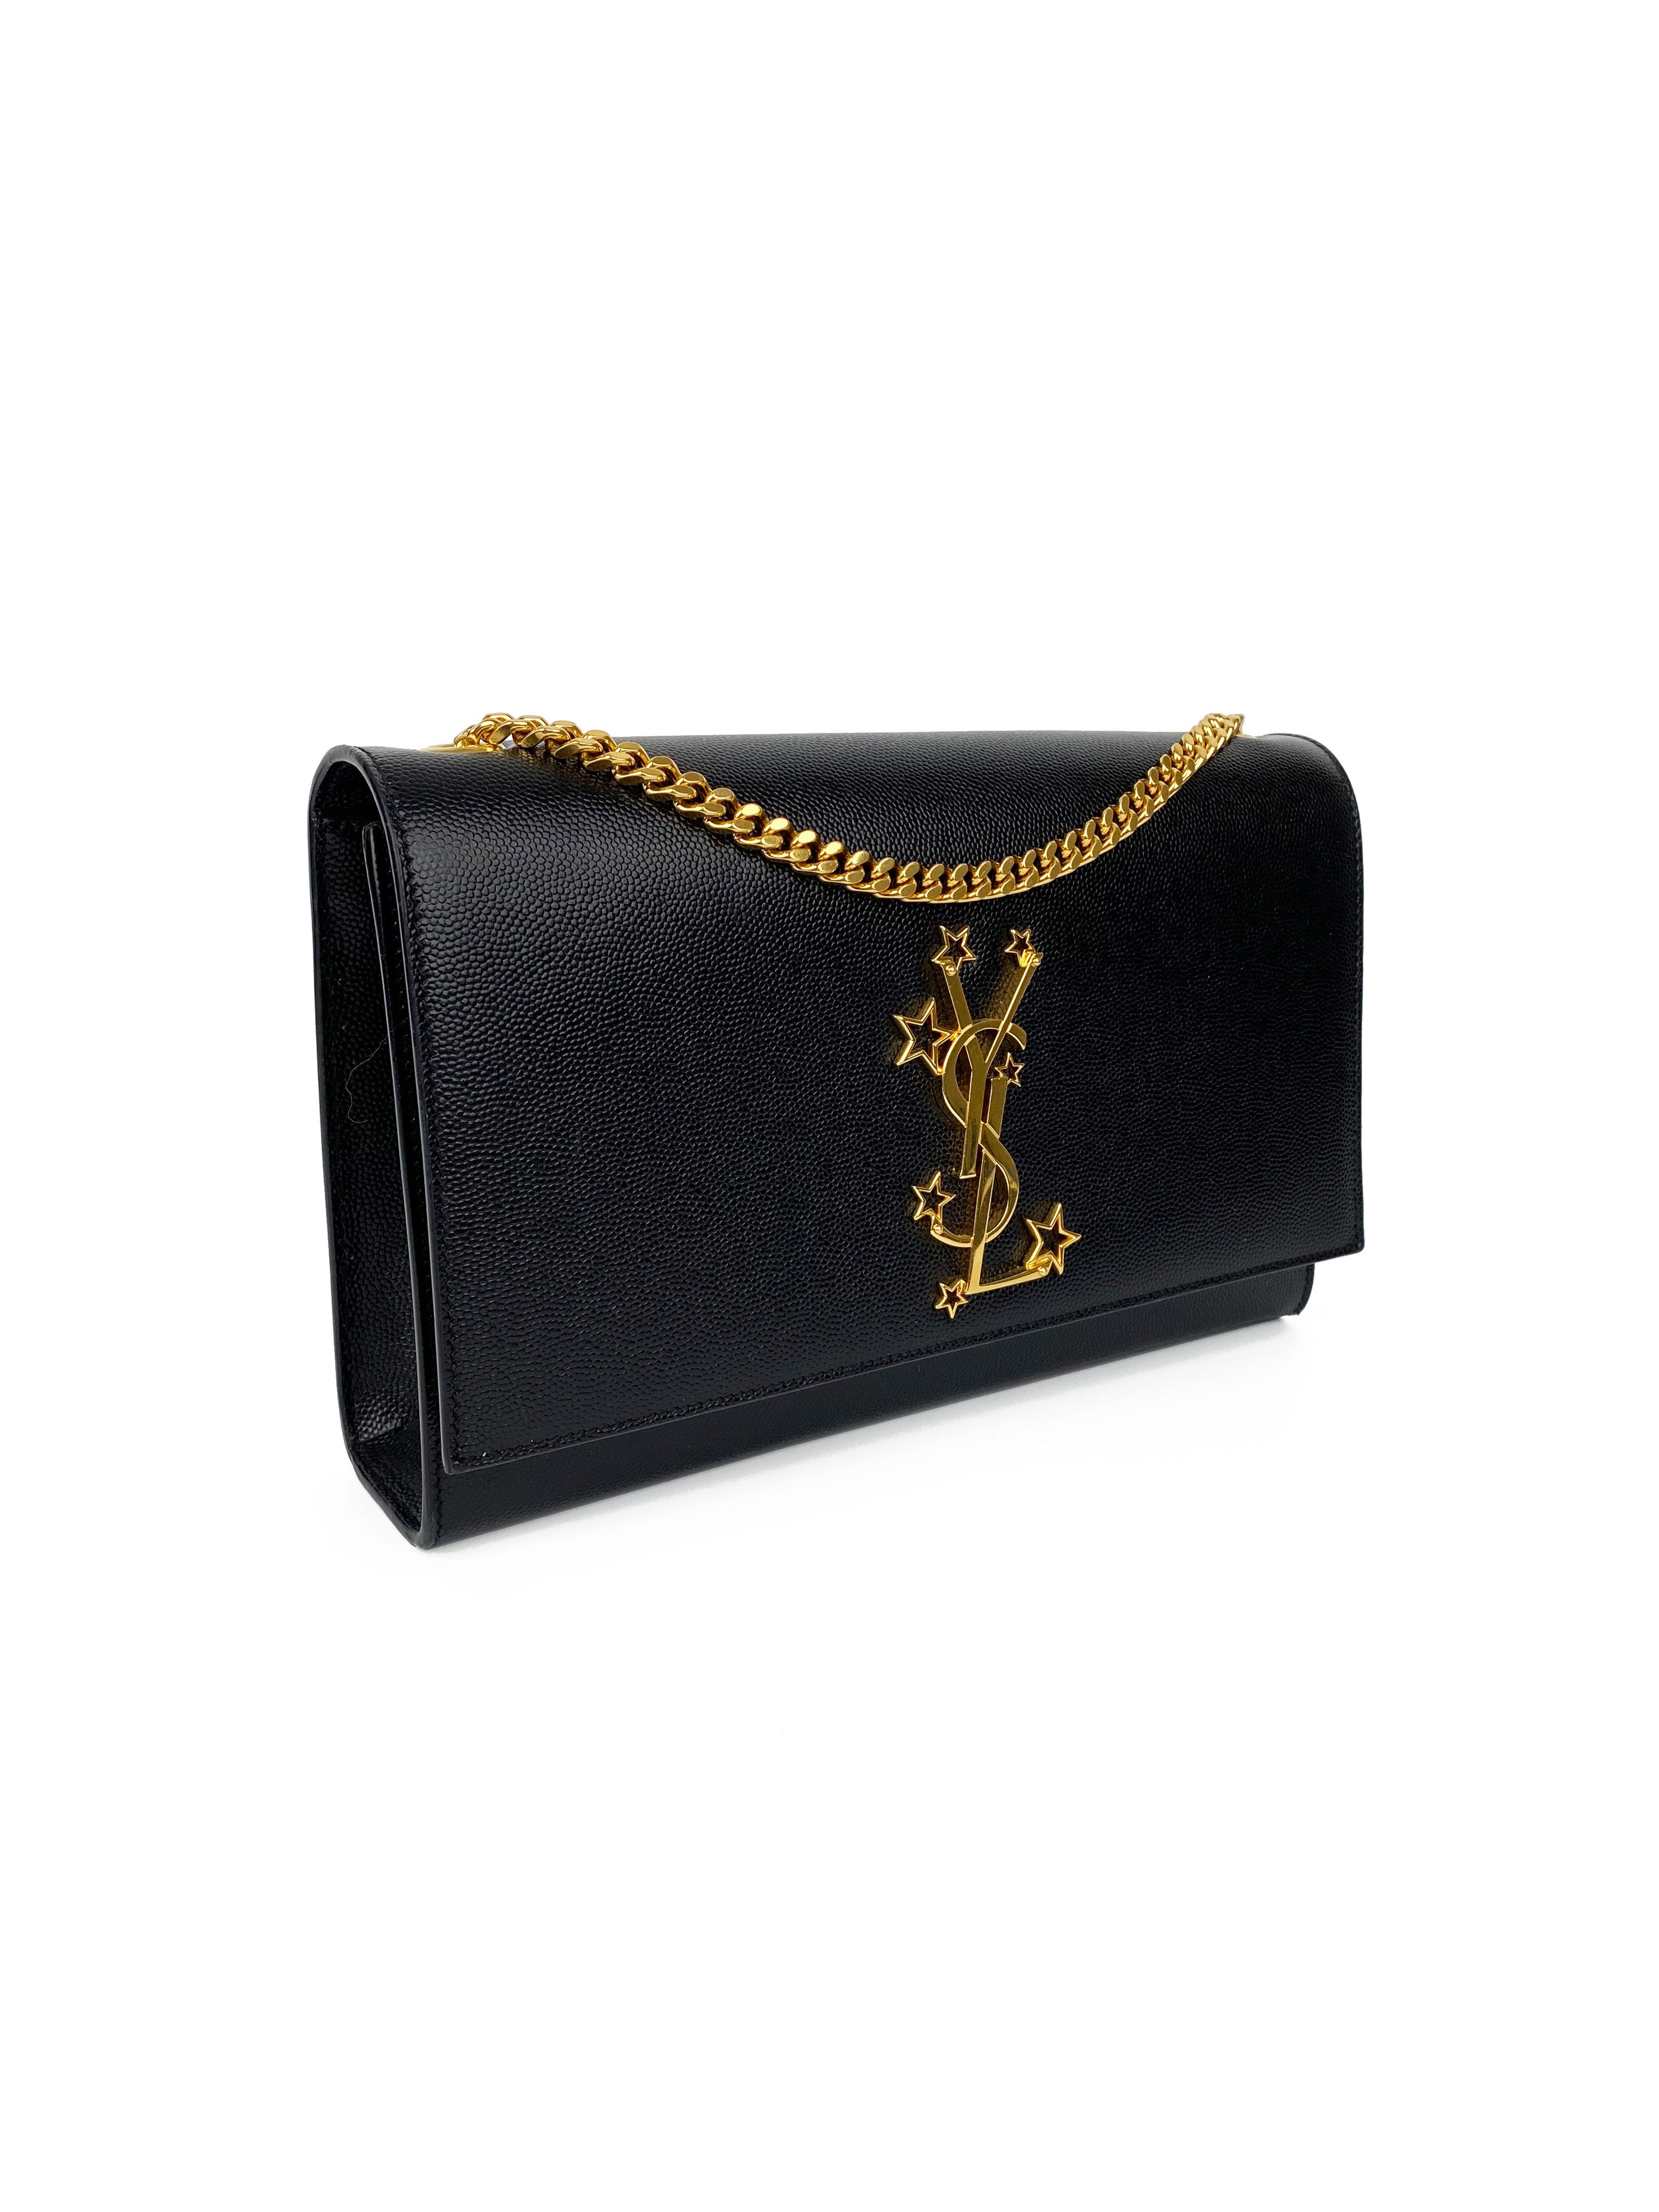 Saint Laurent Limited Edition Black Star Kate Bag